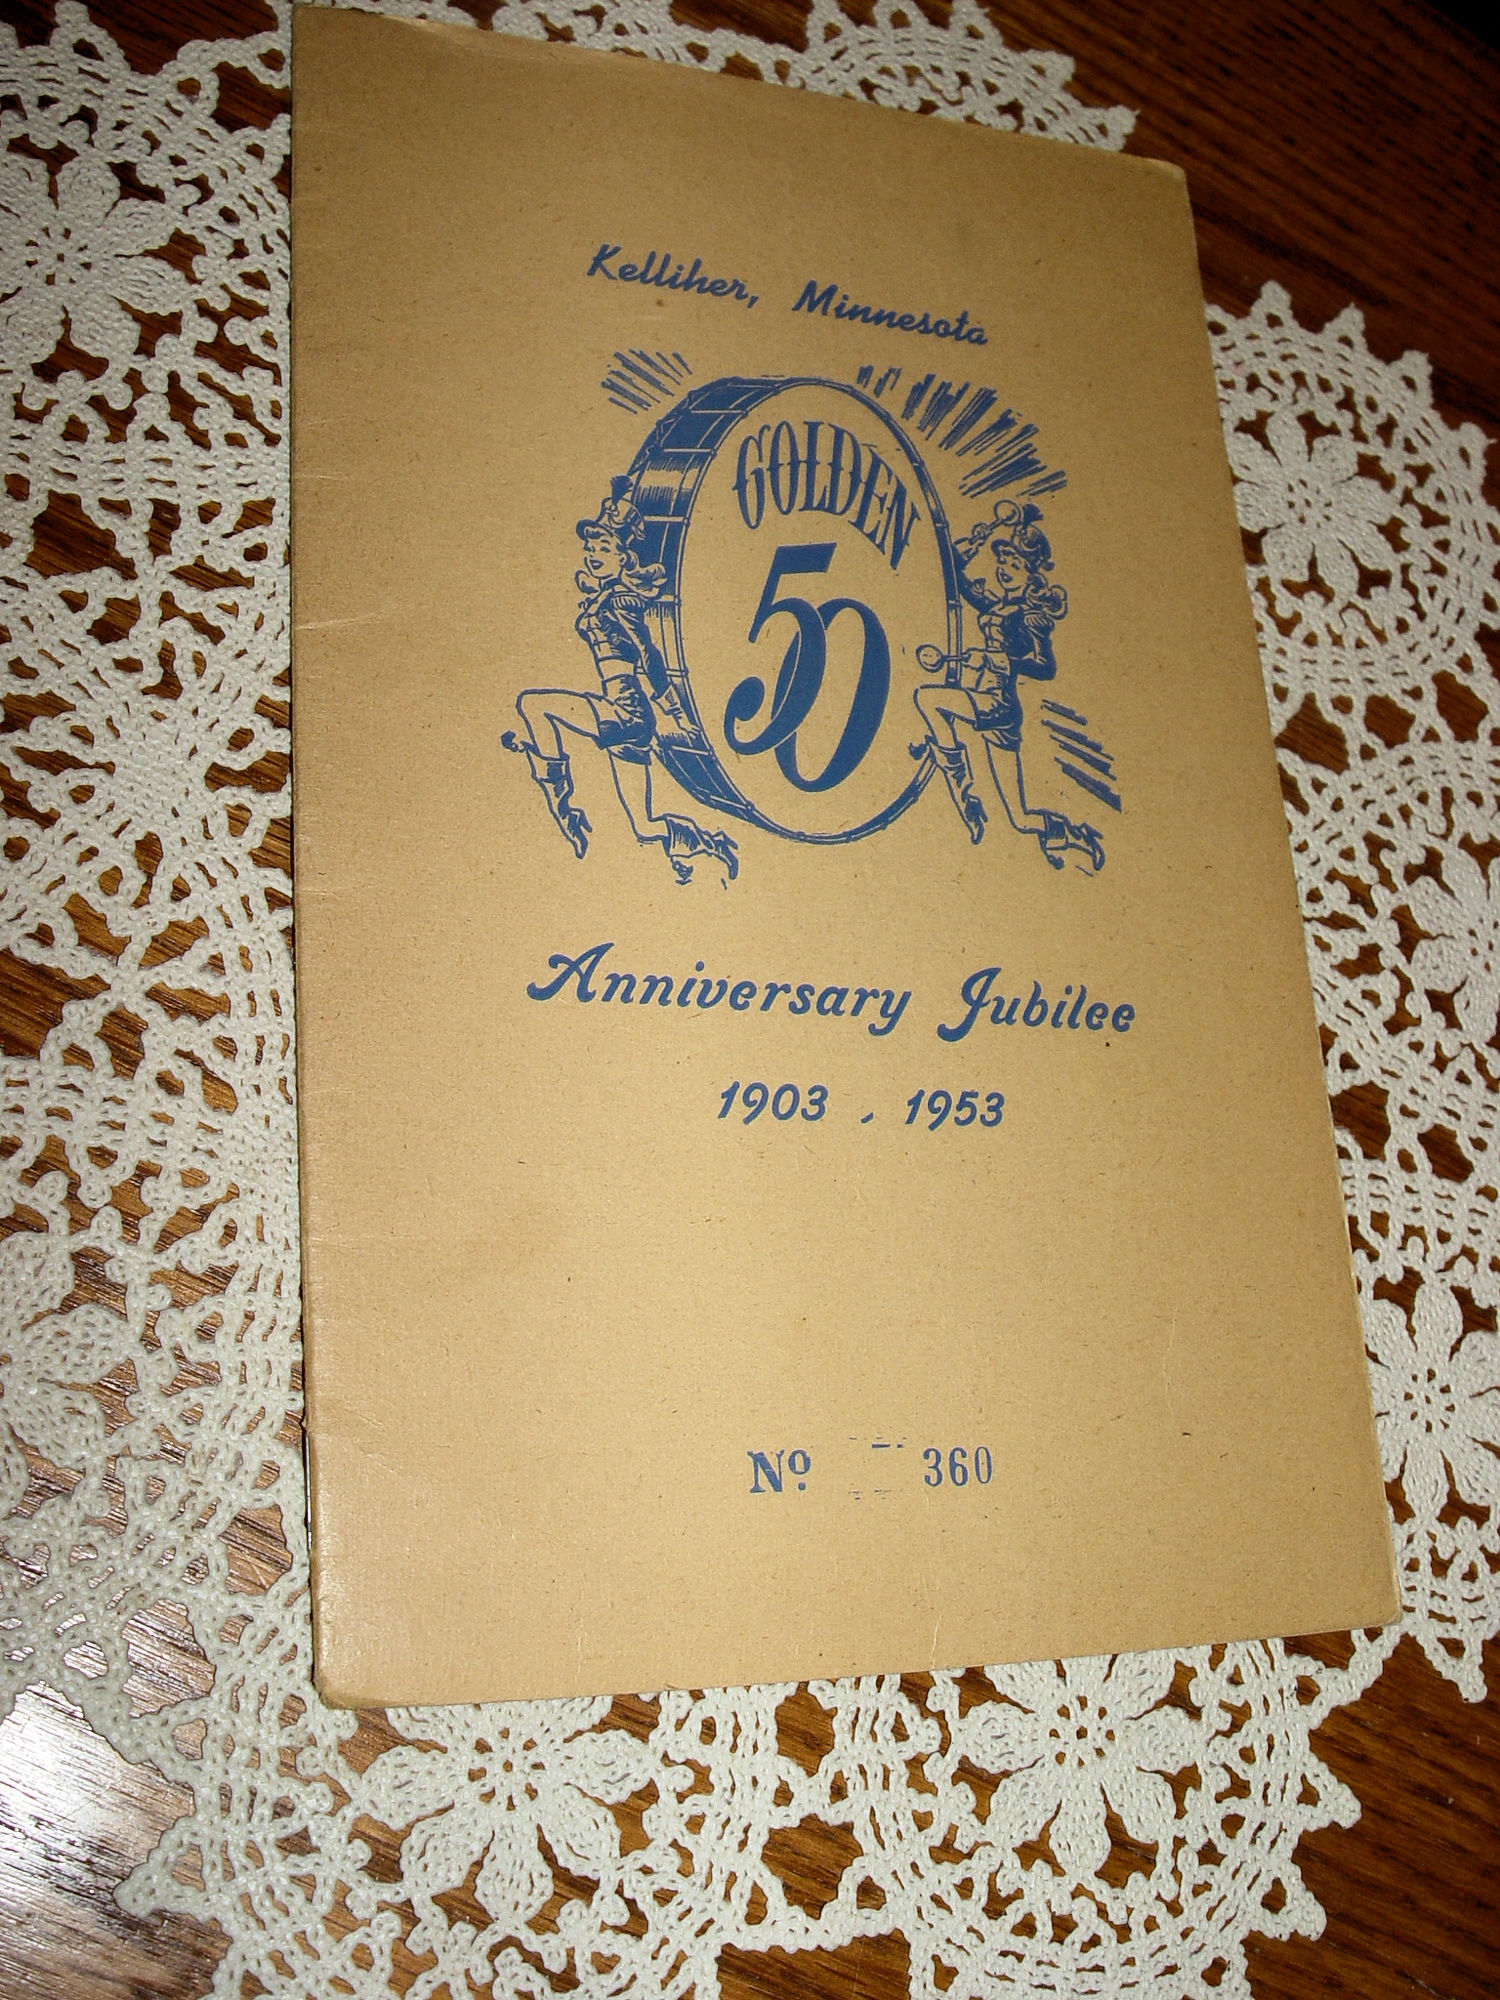 1953 Kelliher,
                        Minnesota Anniversary Jubilee Souvenir Program
                        No. 360